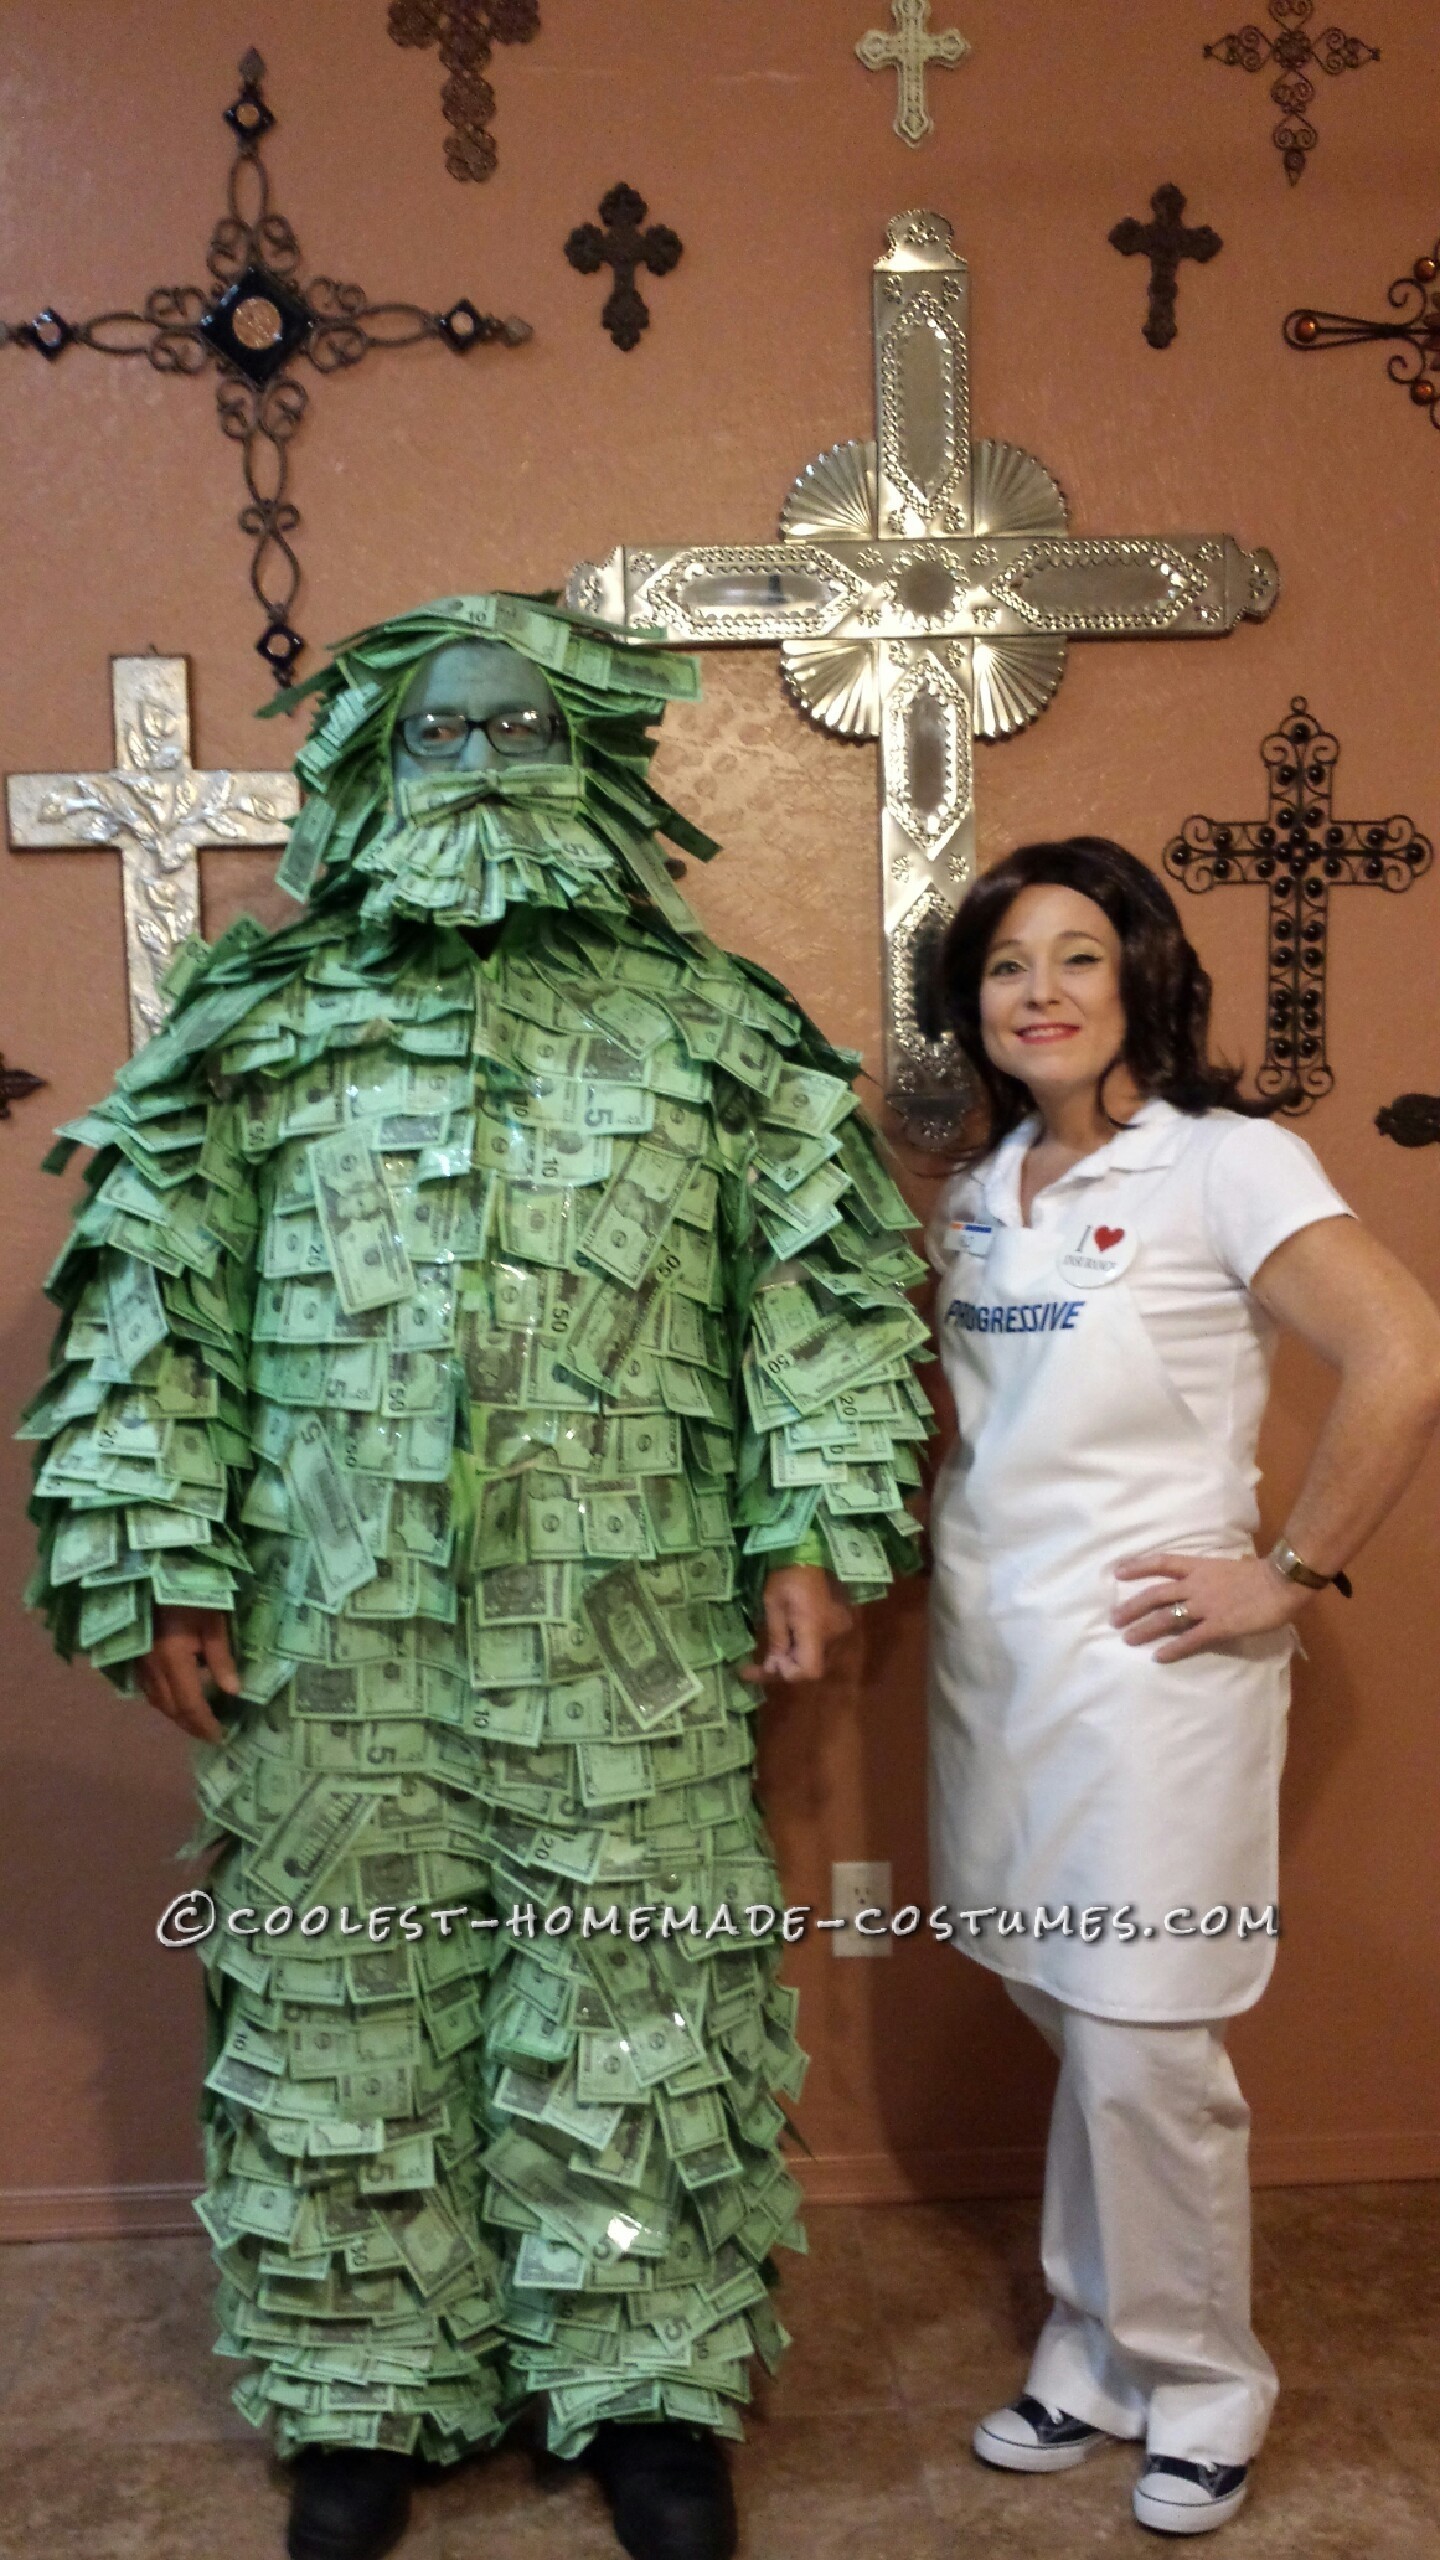 One of a Kind! Homemade Geico Money Man Costume